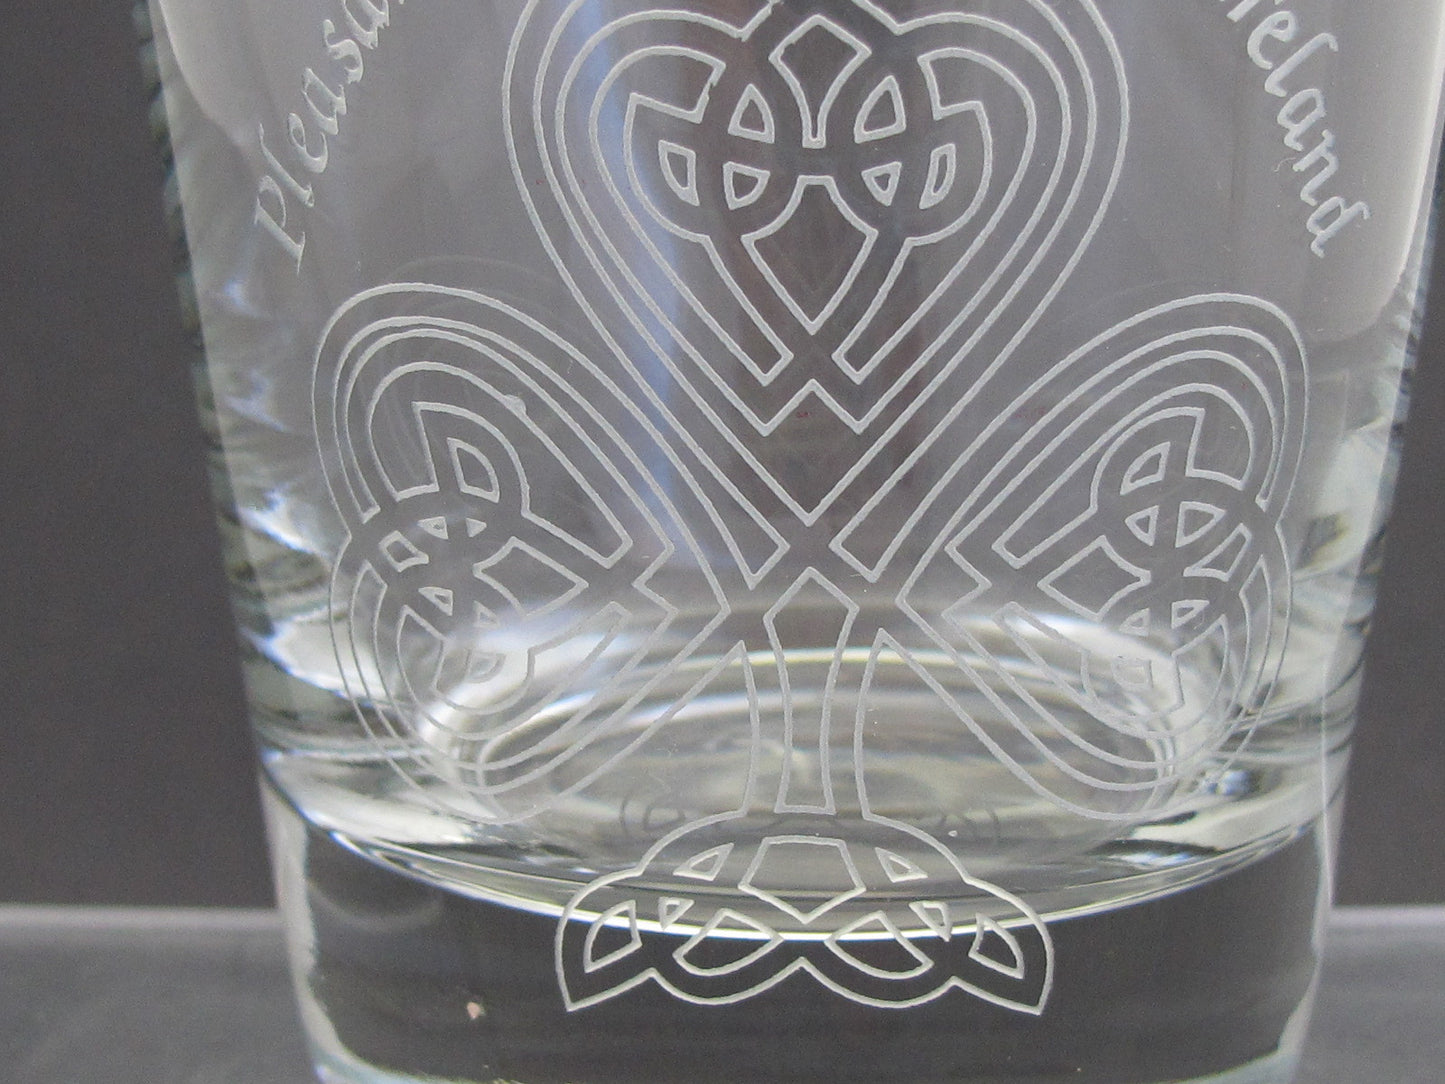 celtic / shamrock DOR glass 13 oz, St Patricks day gift, Ireland - O'Rourke crystal awards & gifts abp cut glass